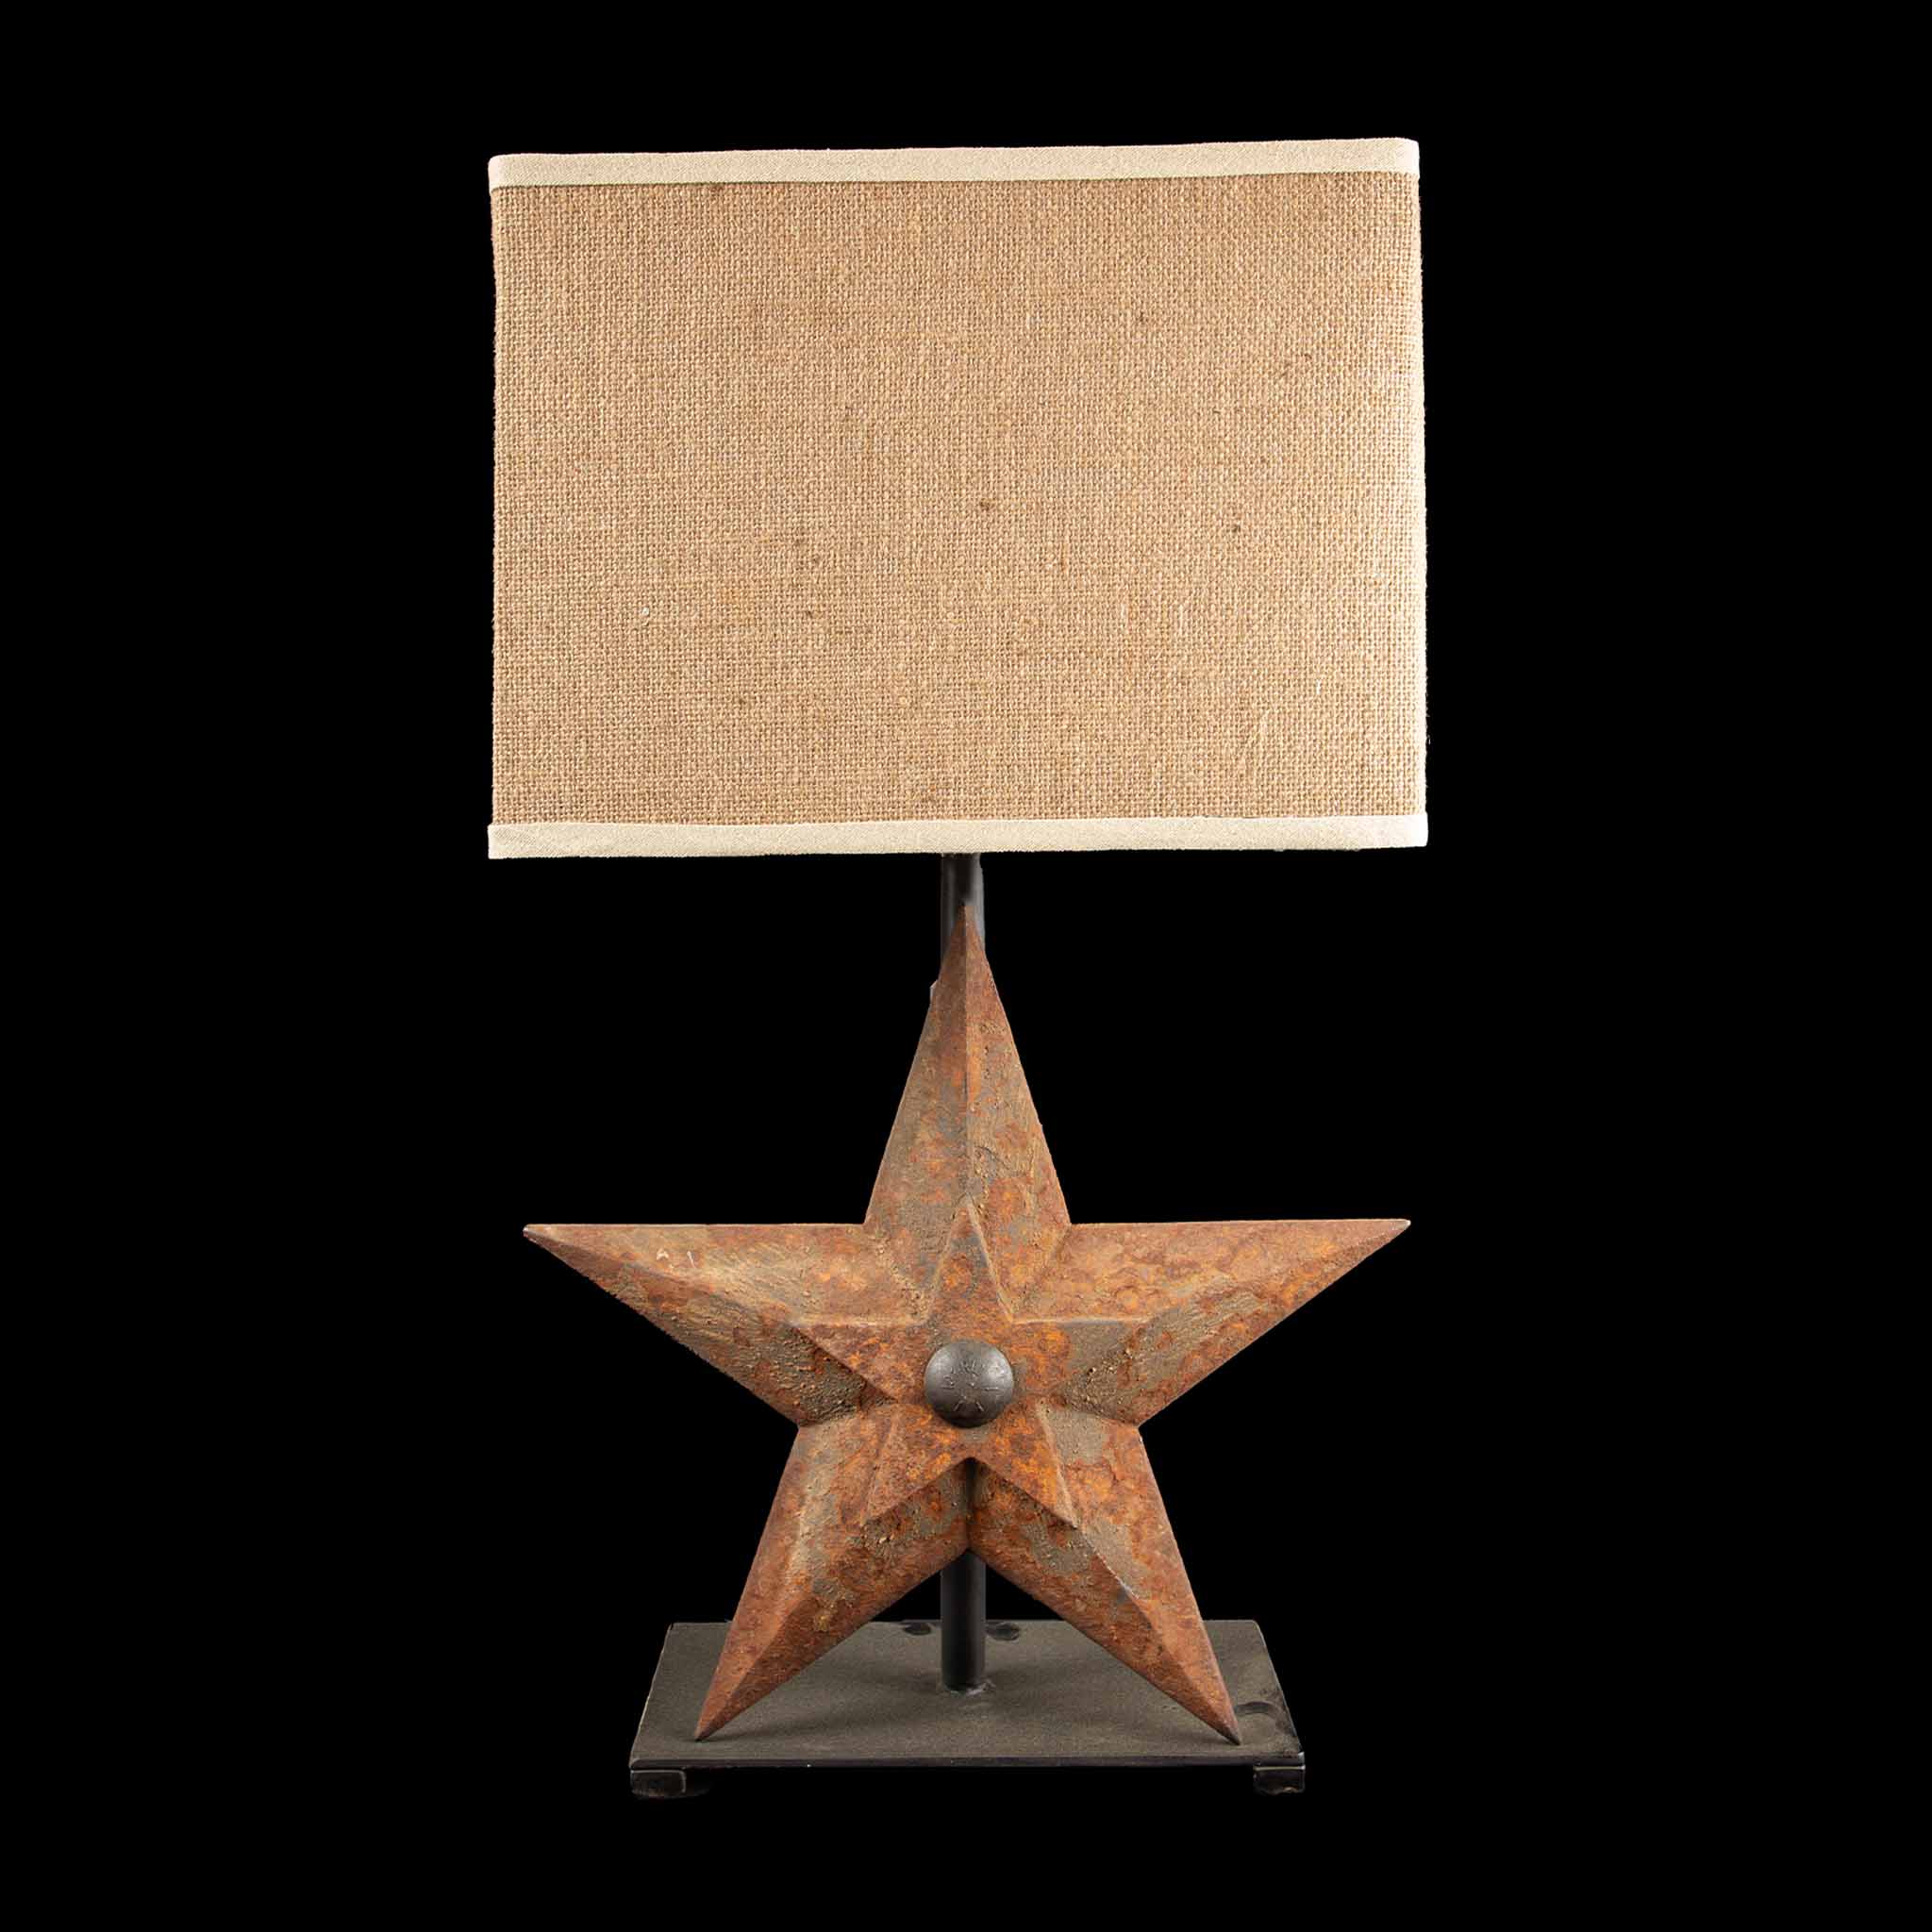 Cast Iron Star Lamp- Repurposed Architectural Element